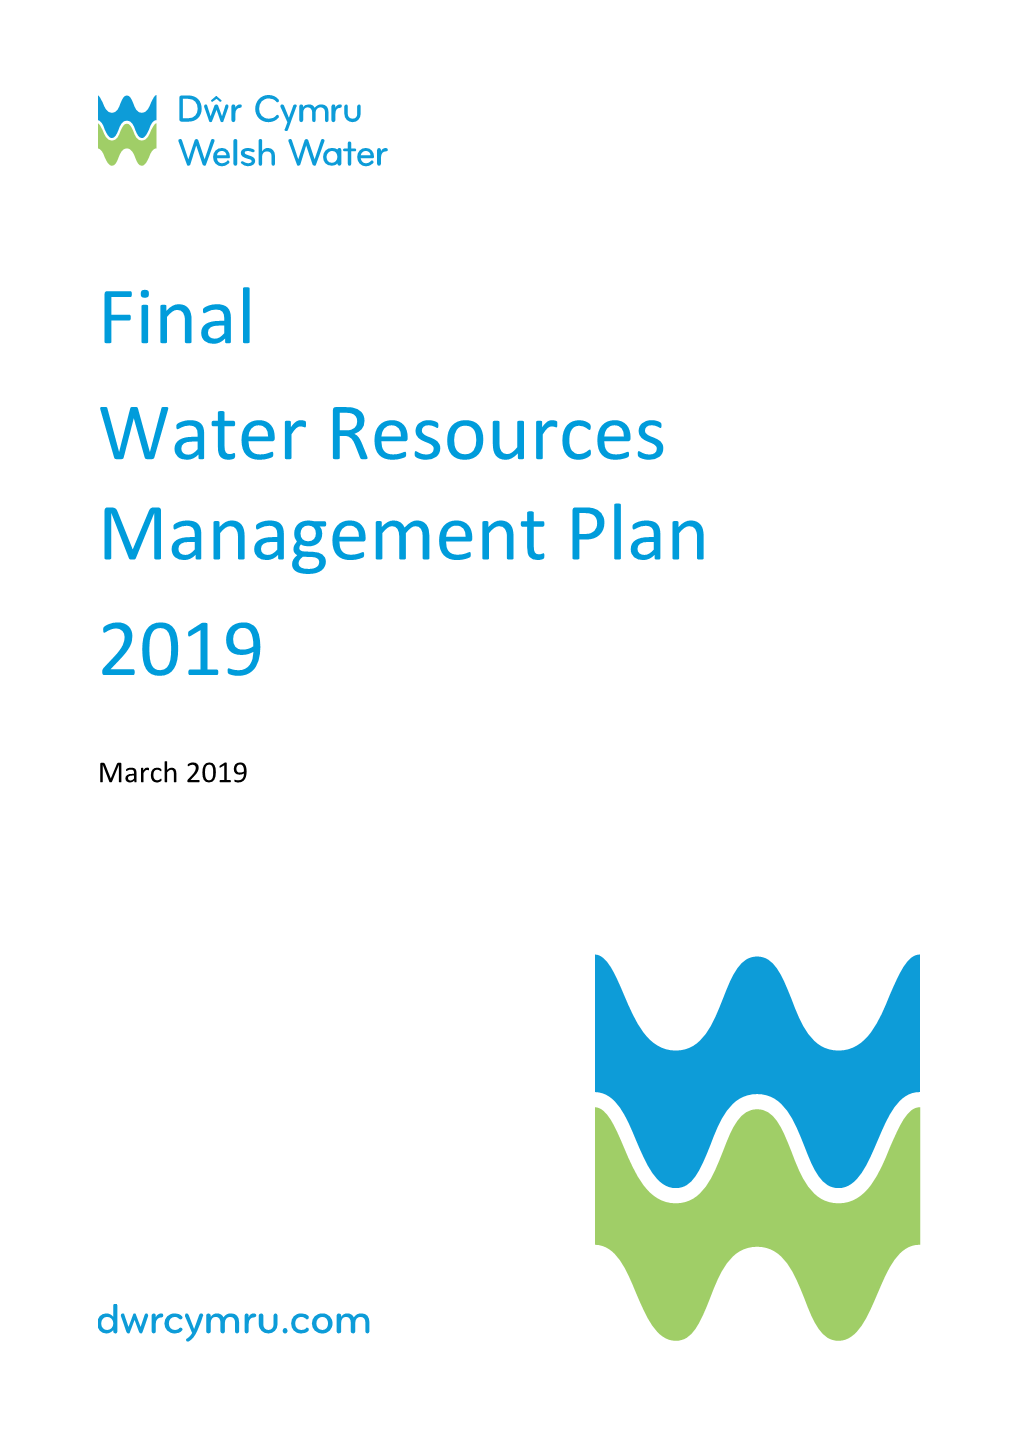 Final Water Resources Management Plan 2019